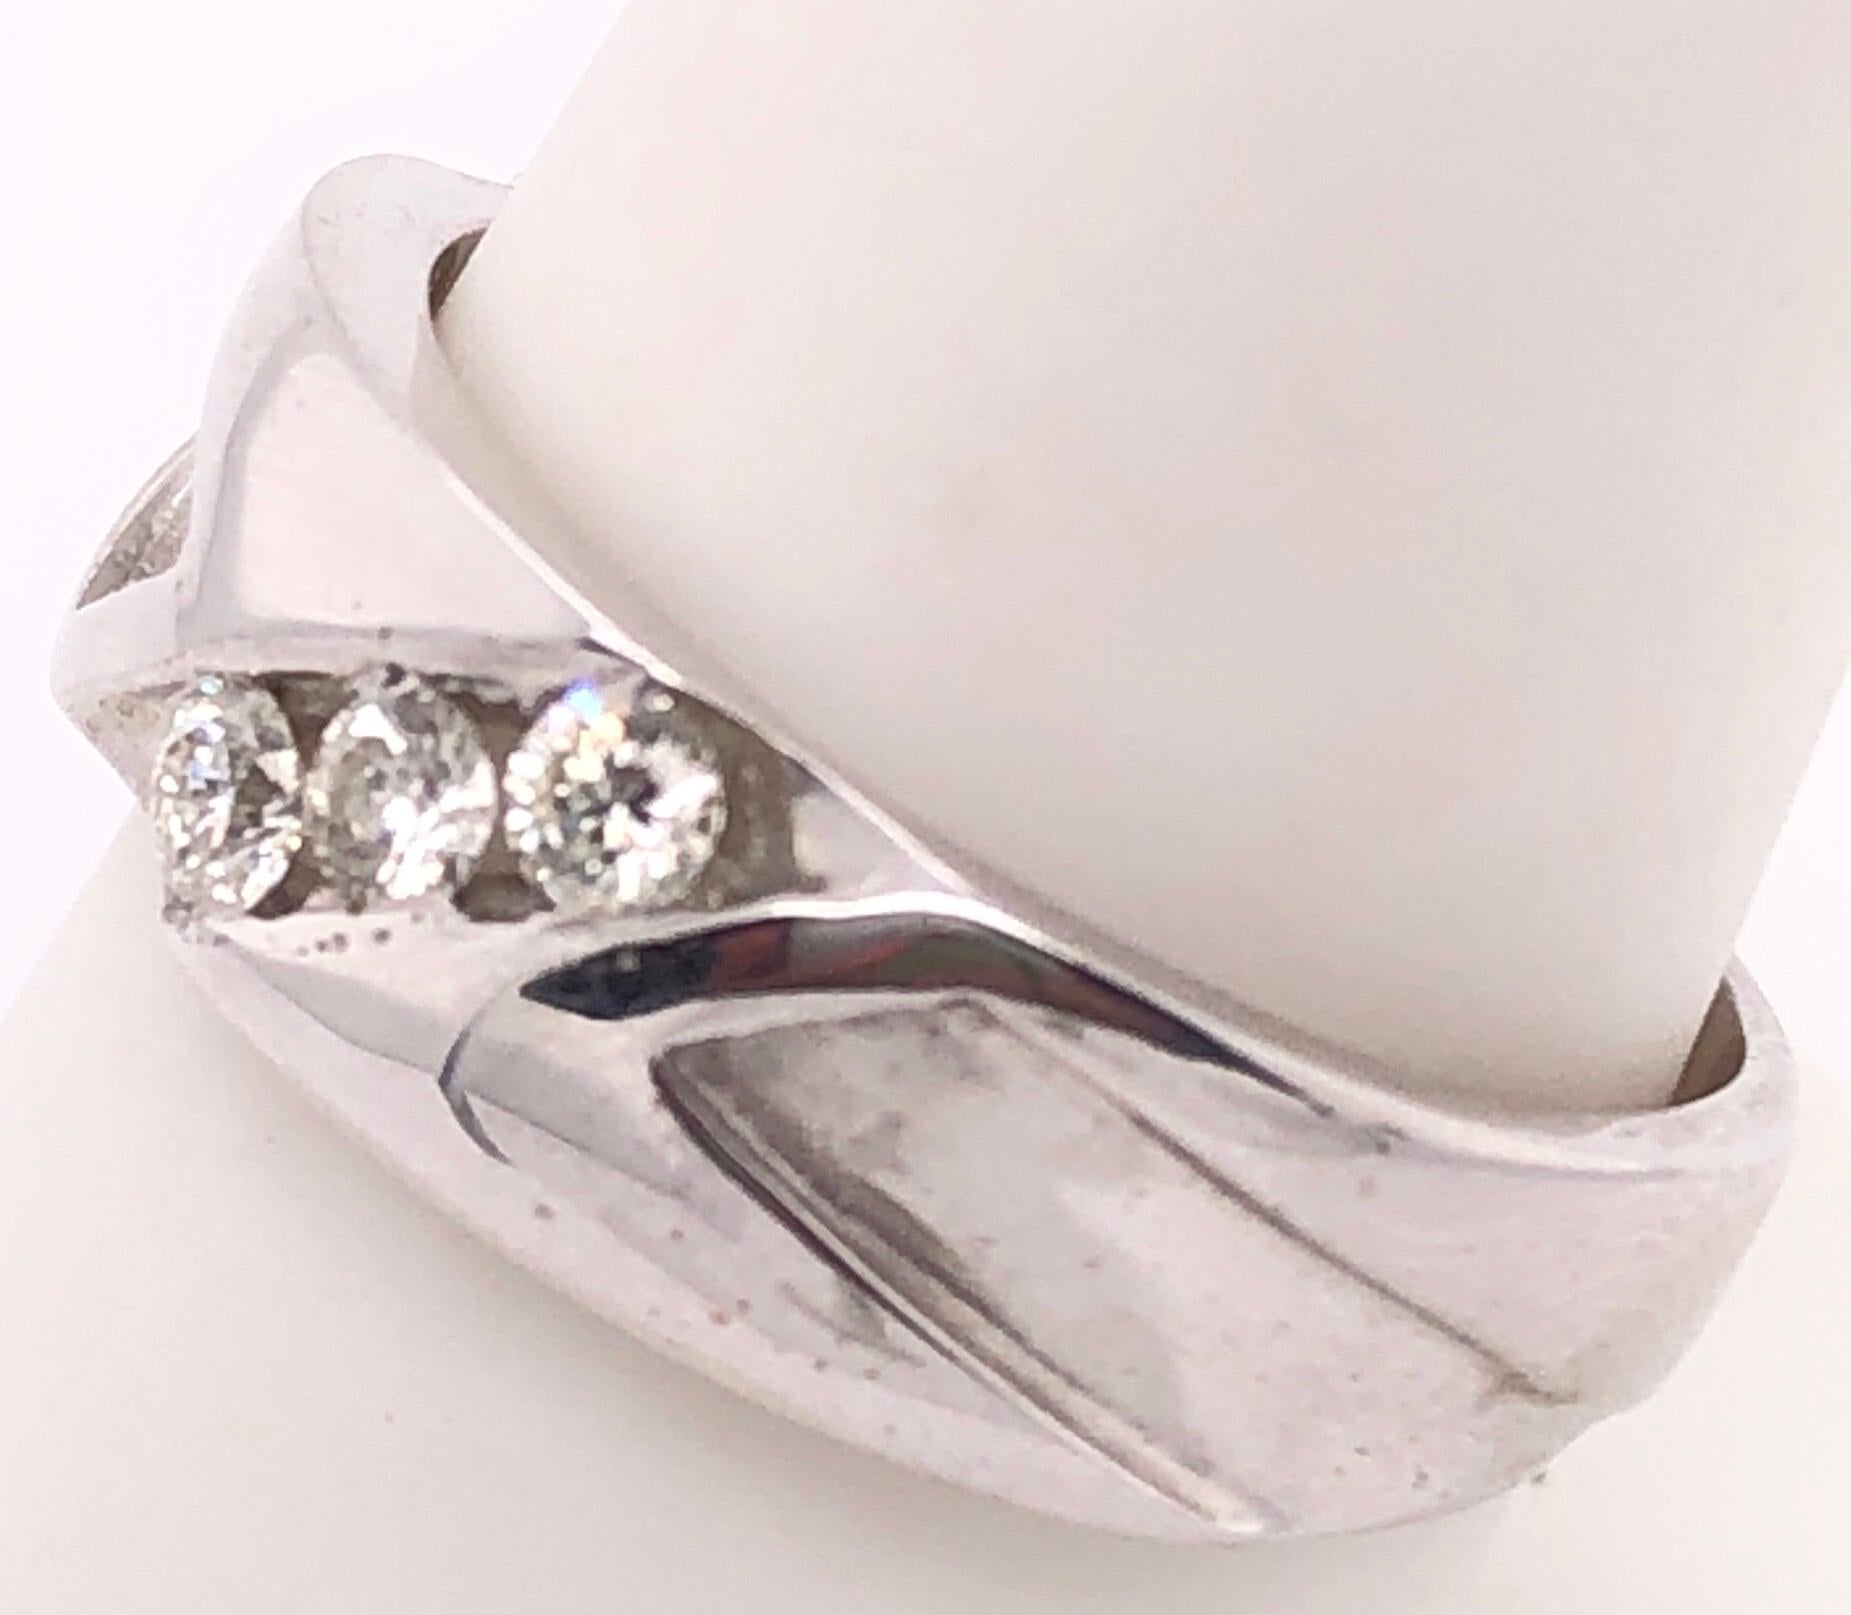 14 Karat White Gold 3 Stone Ring 0.30 Total Diamond Weight.
Size 8.75
5 grams total weight.